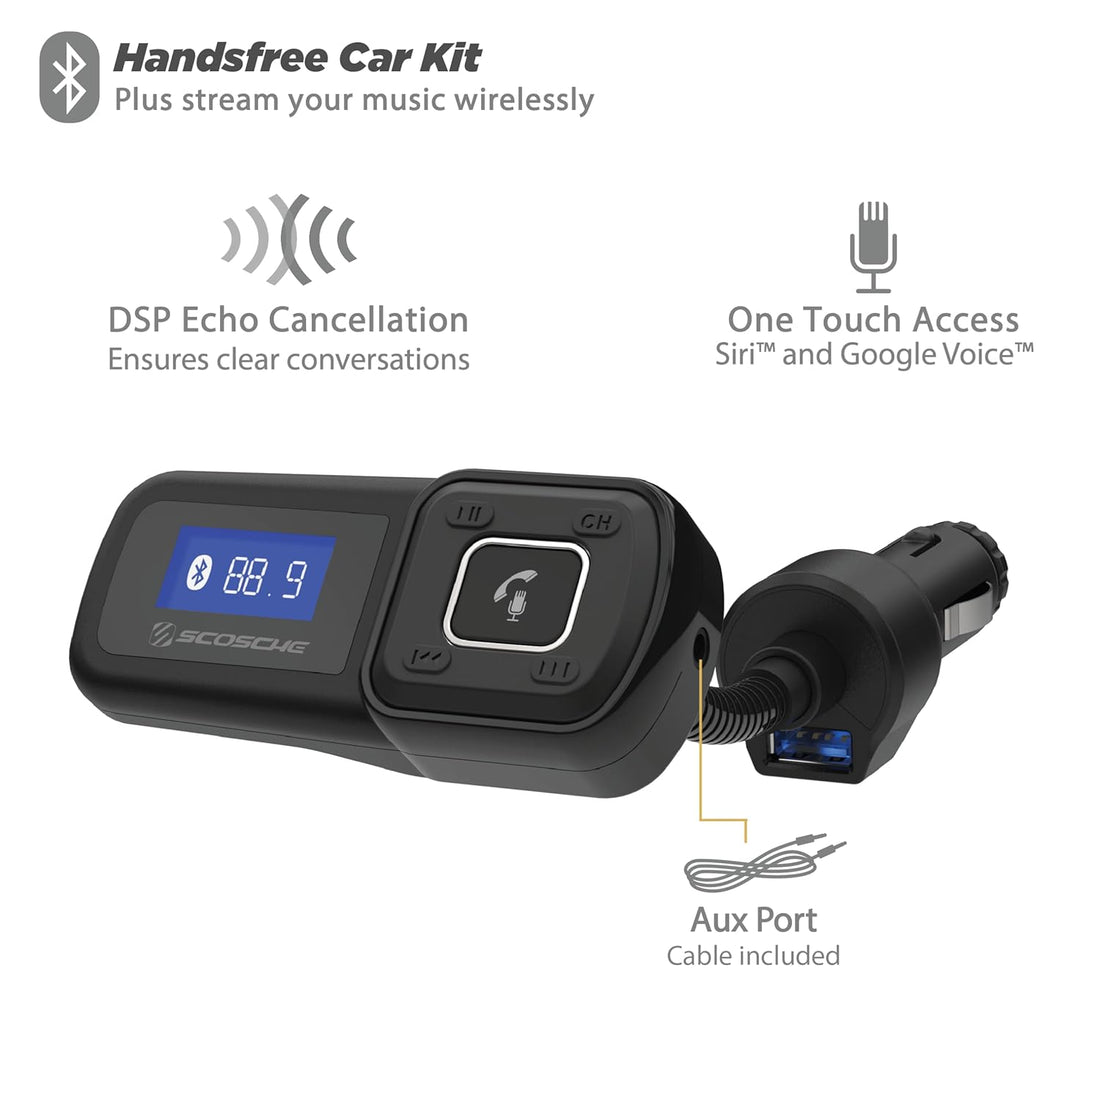 SCOSCHE BTFM2A BTFREQ Universal Bluetooth Hands-Free Car Kit with Digital FM Transmitter and 10-Watt USB Car Charger